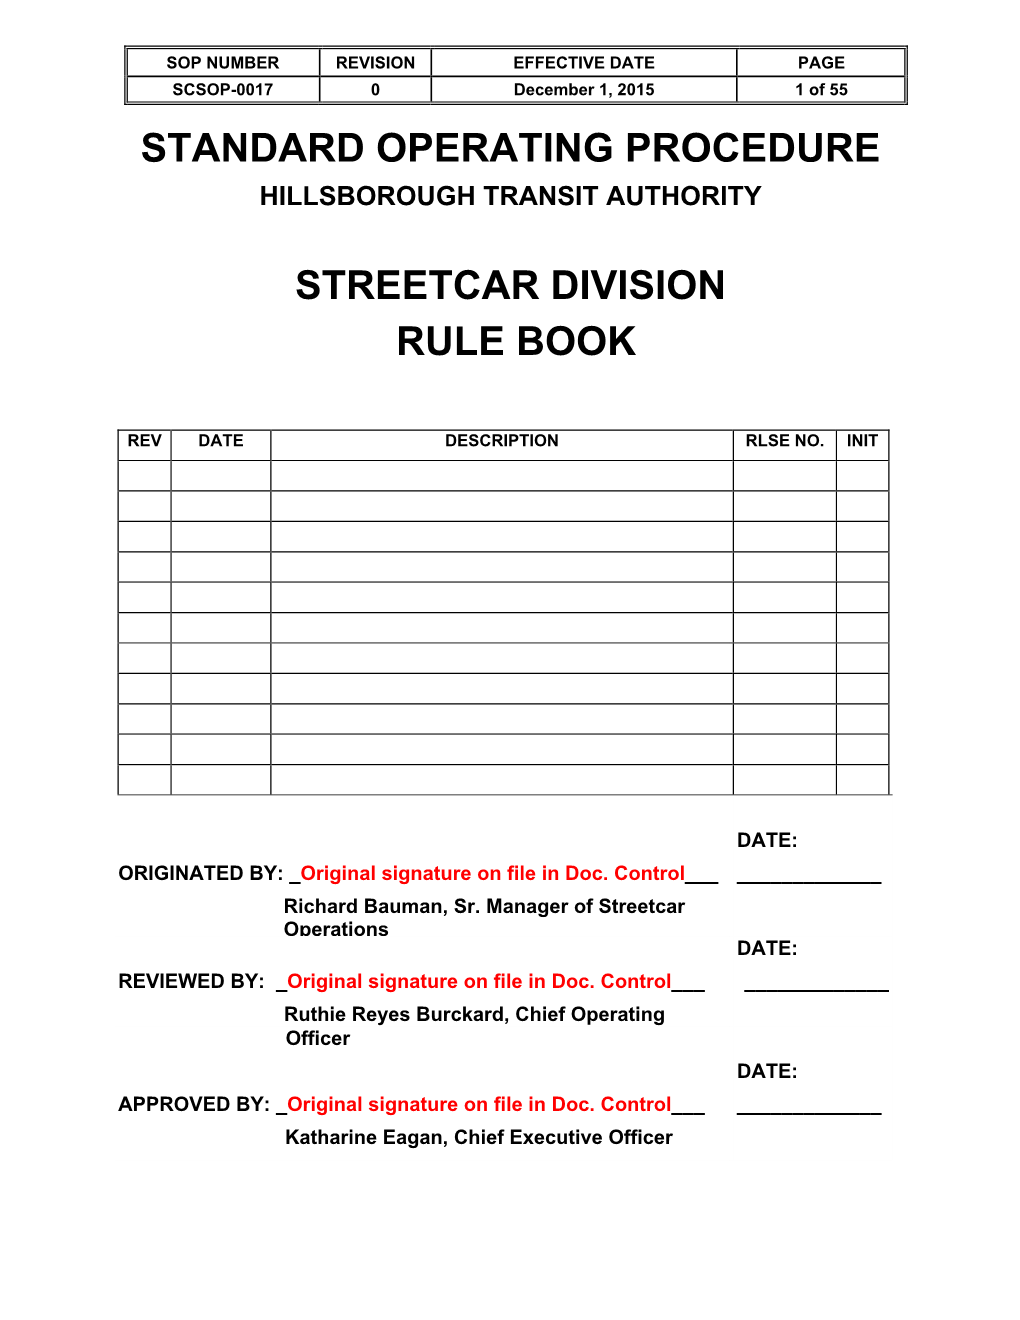 Standard Operating Procedure Streetcar Division Rule Book